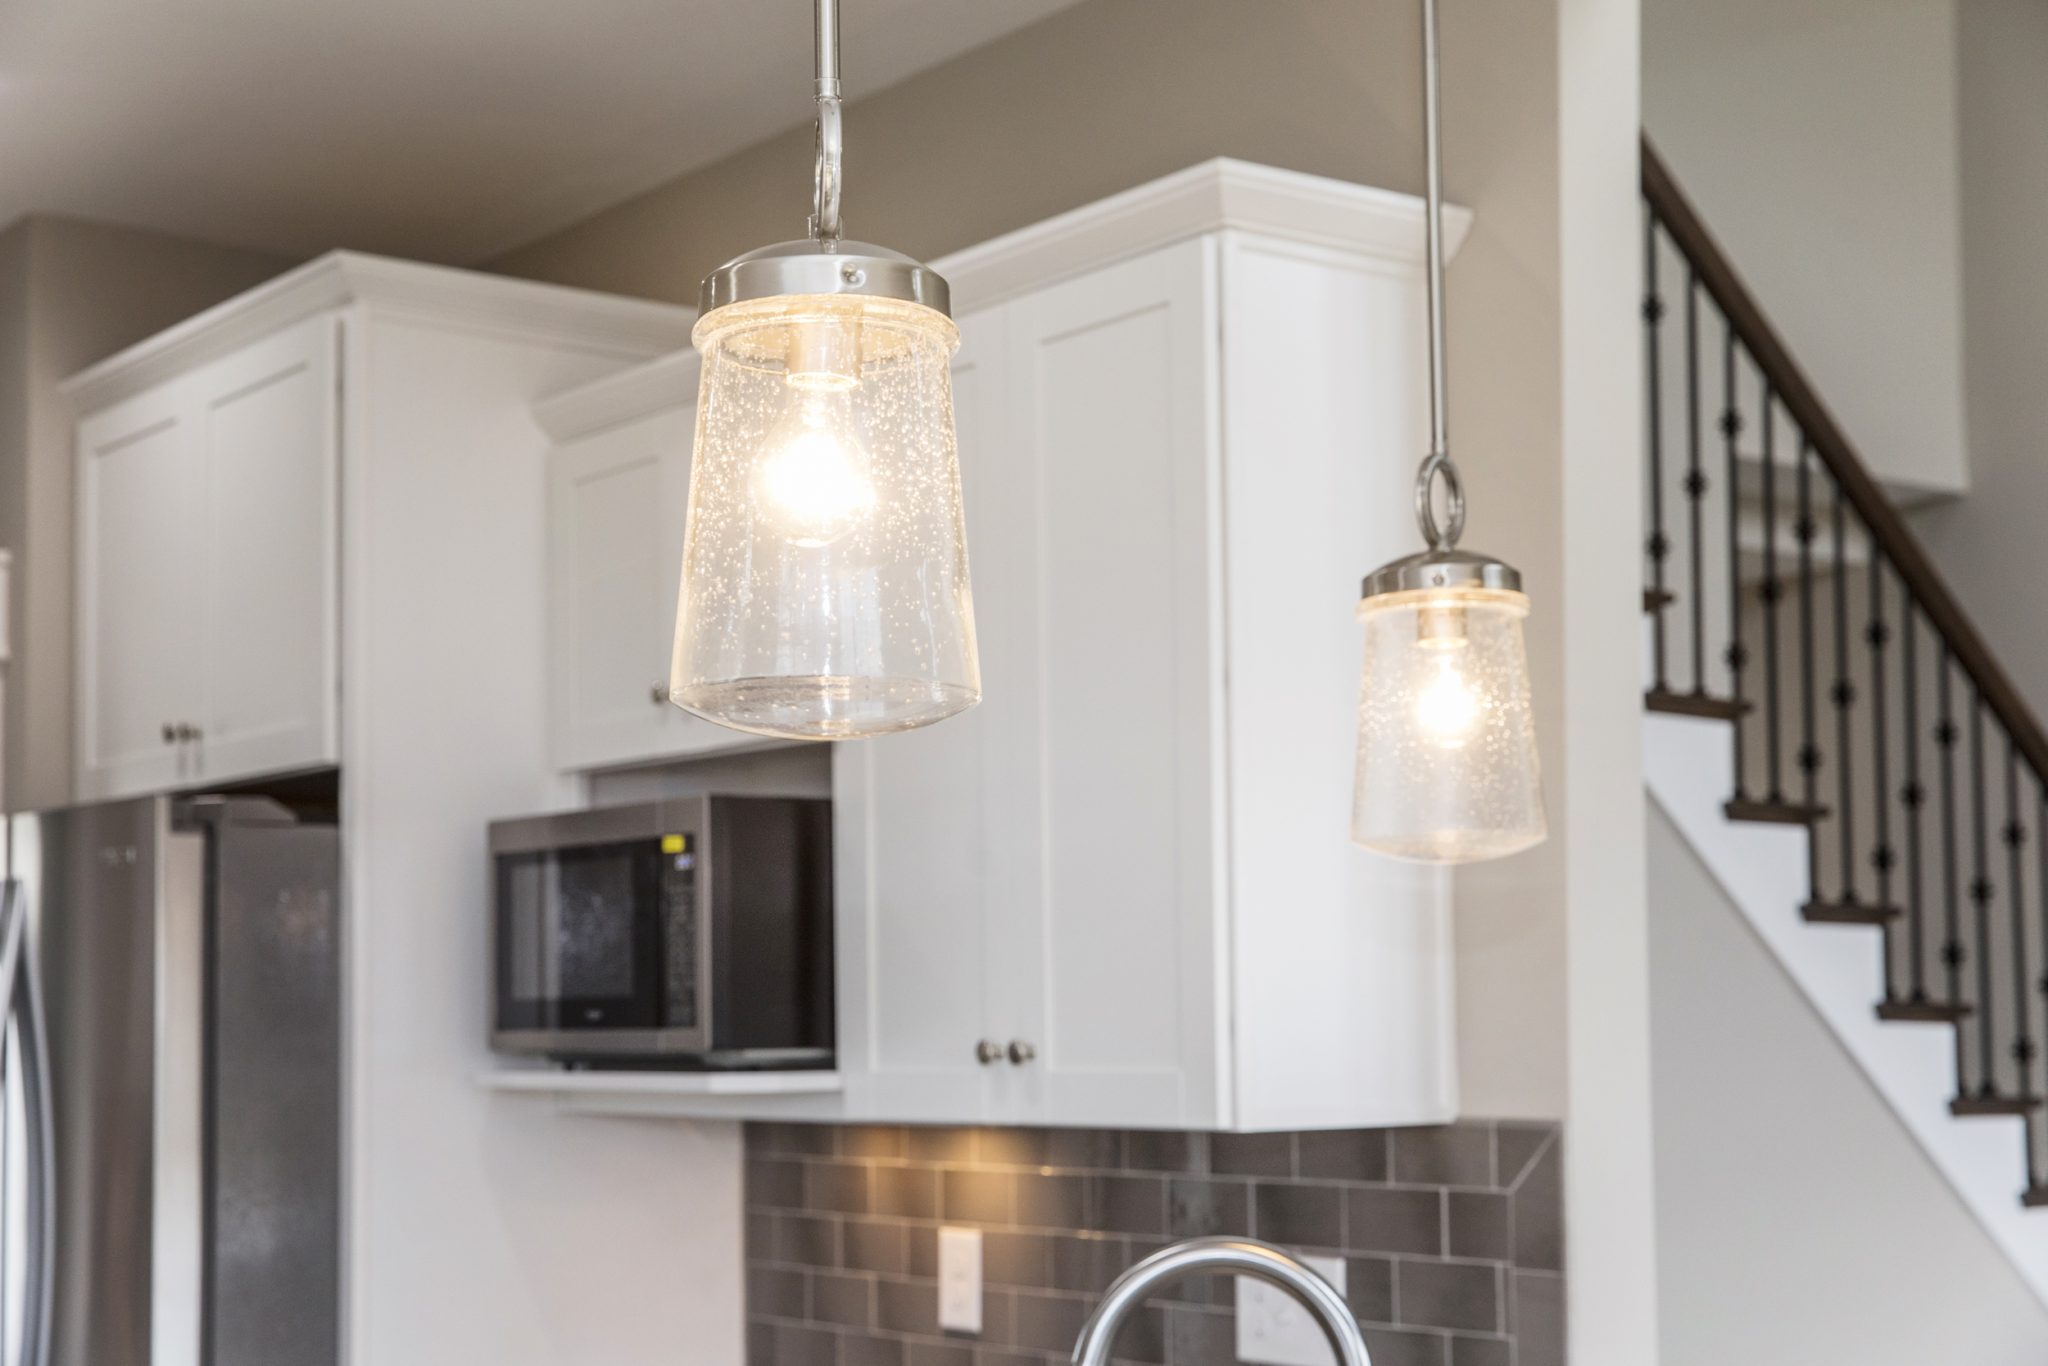 19-kitchen pendant lights